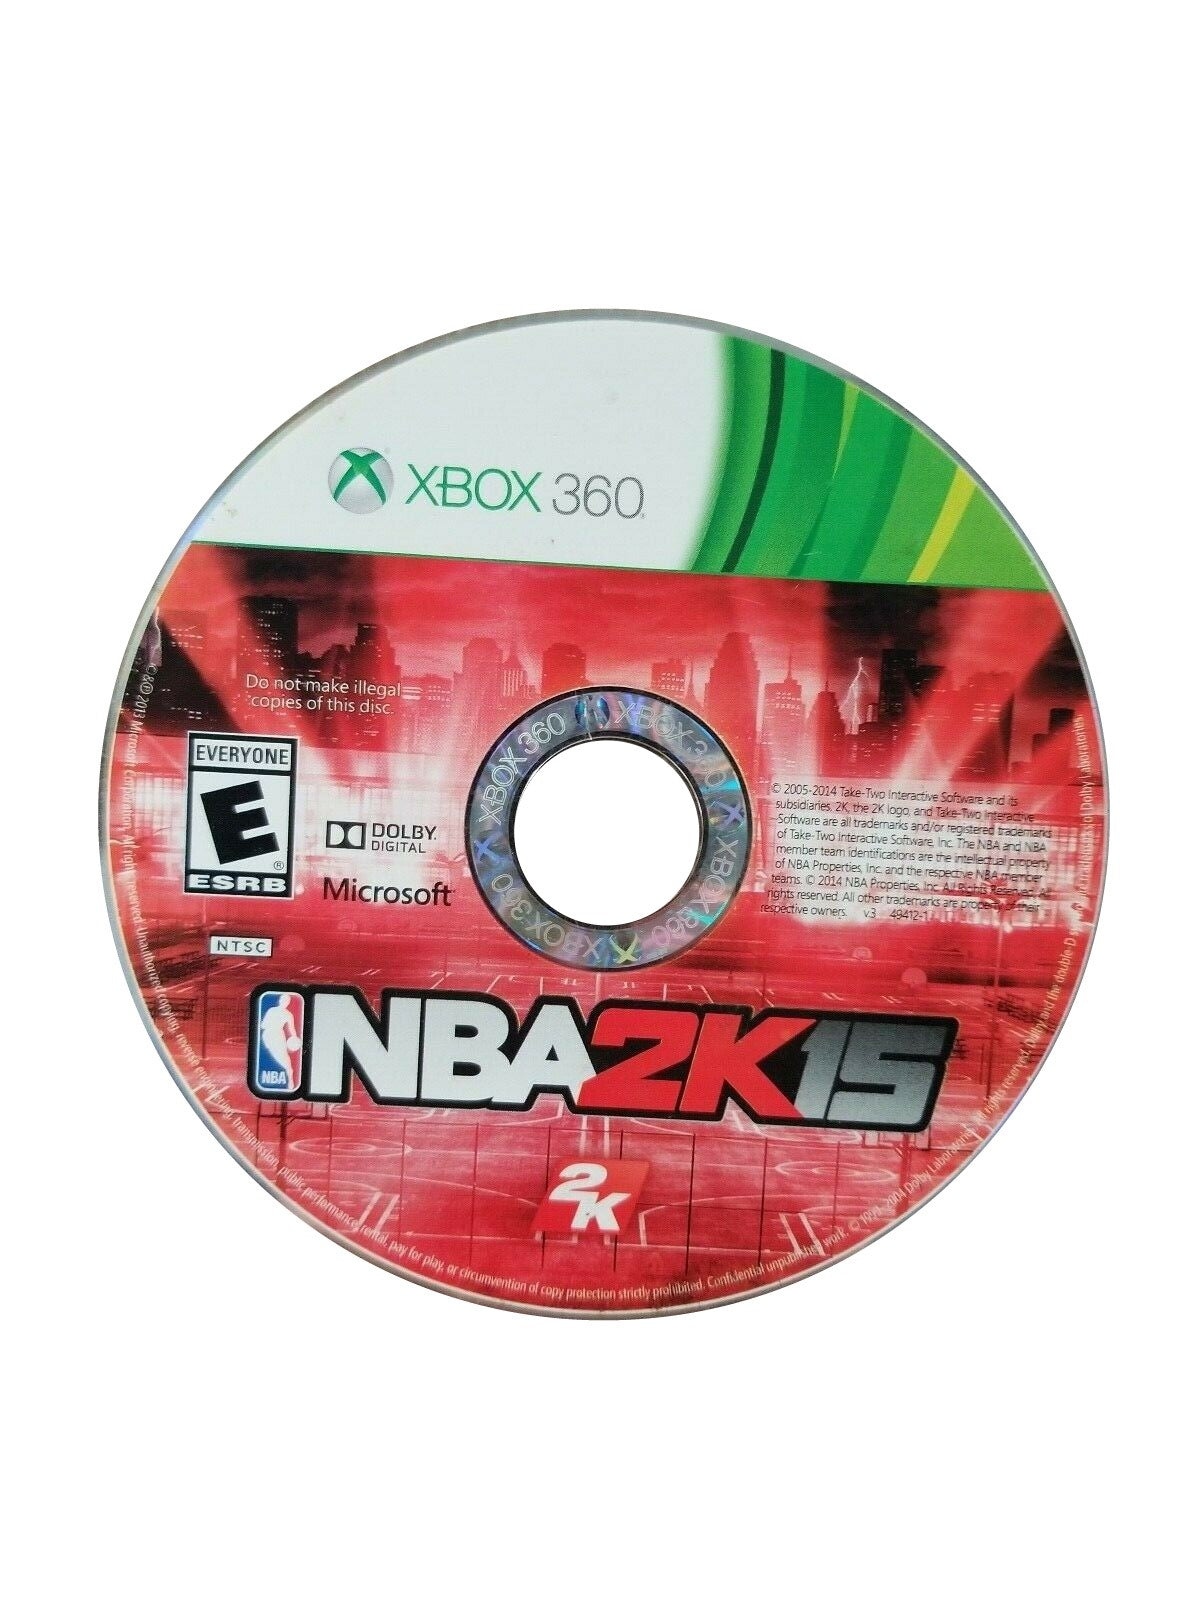 NBA 2K15 - Xbox 360 Game